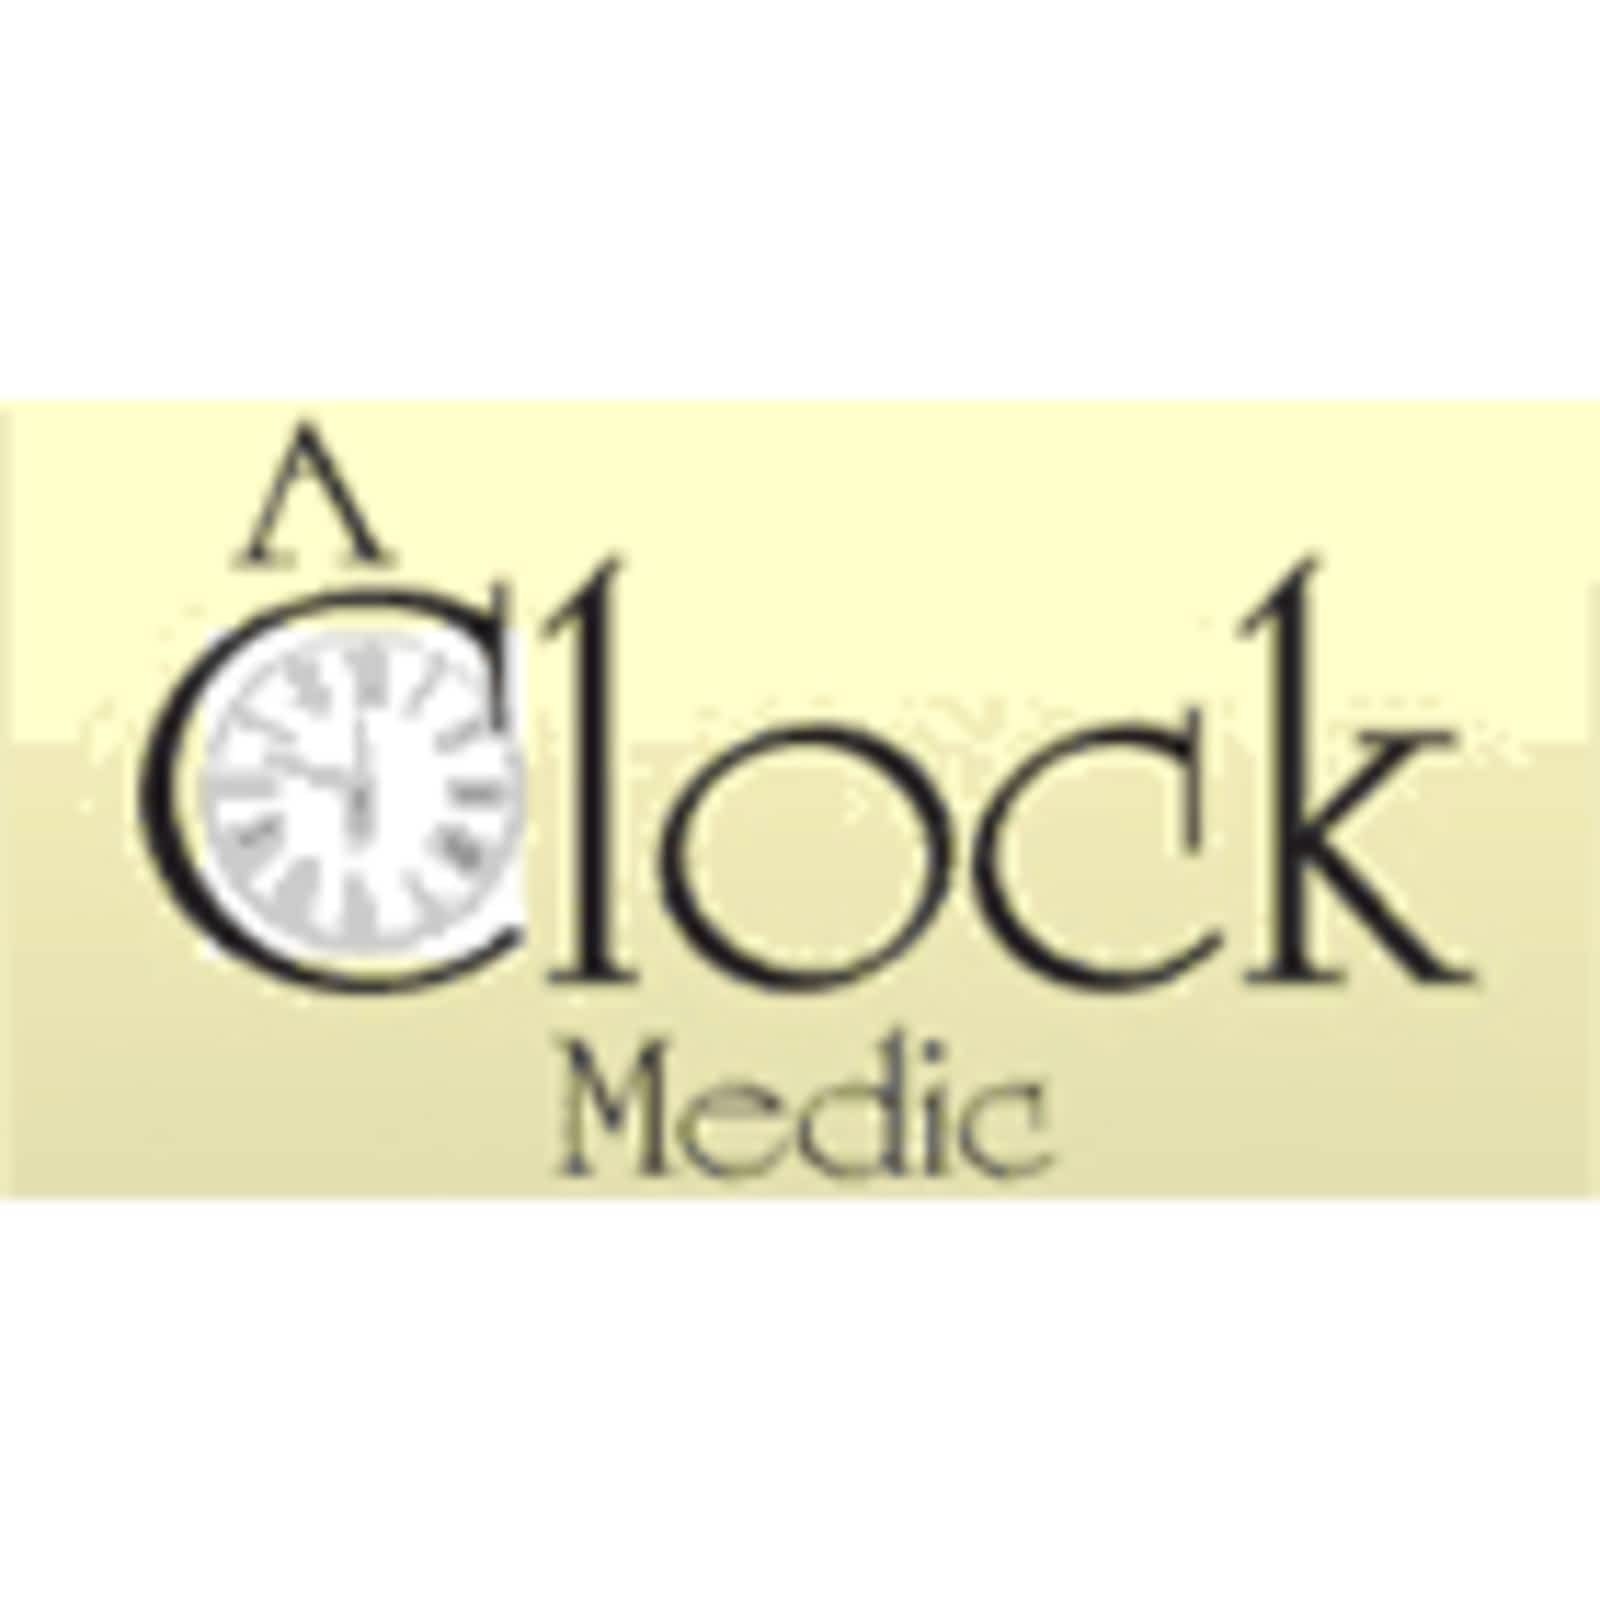 The Clock Medic